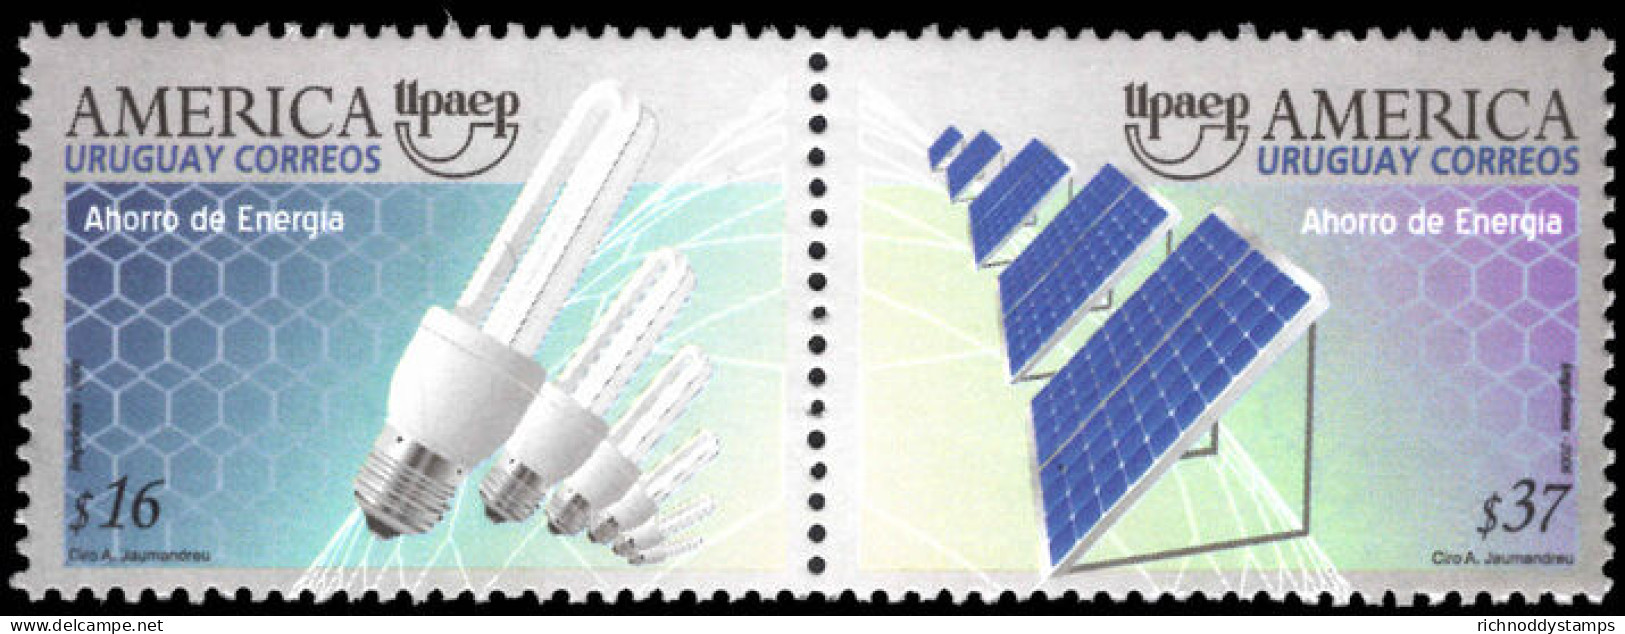 Uruguay 2006 America. Energy Conservation Unmounted Mint. - Uruguay